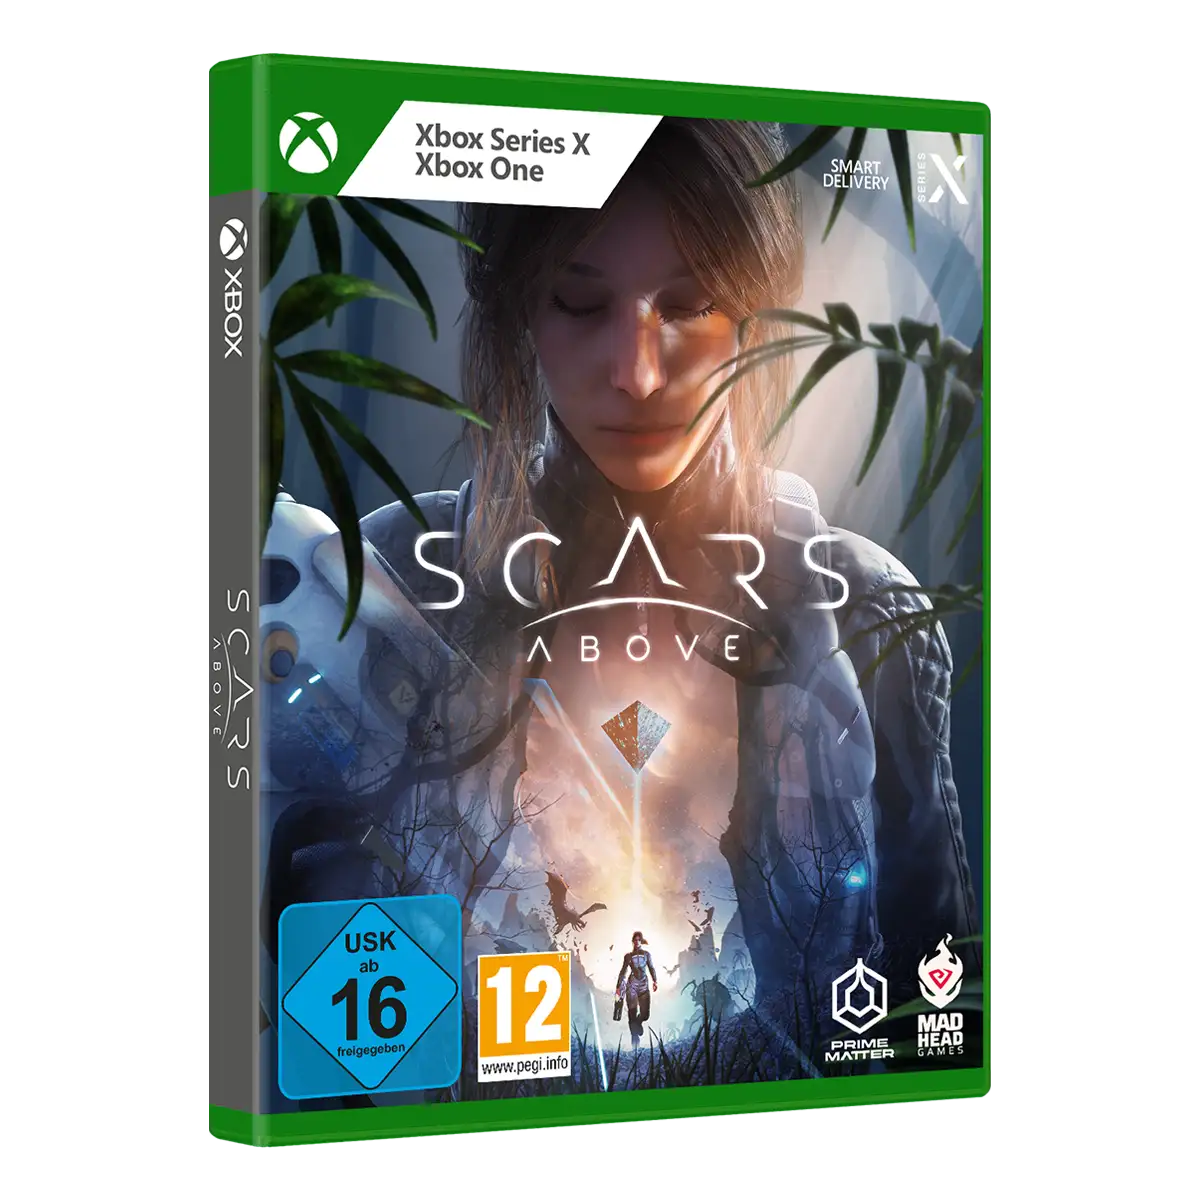 Scars Above (Xbox One / Xbox Series X) Image 2